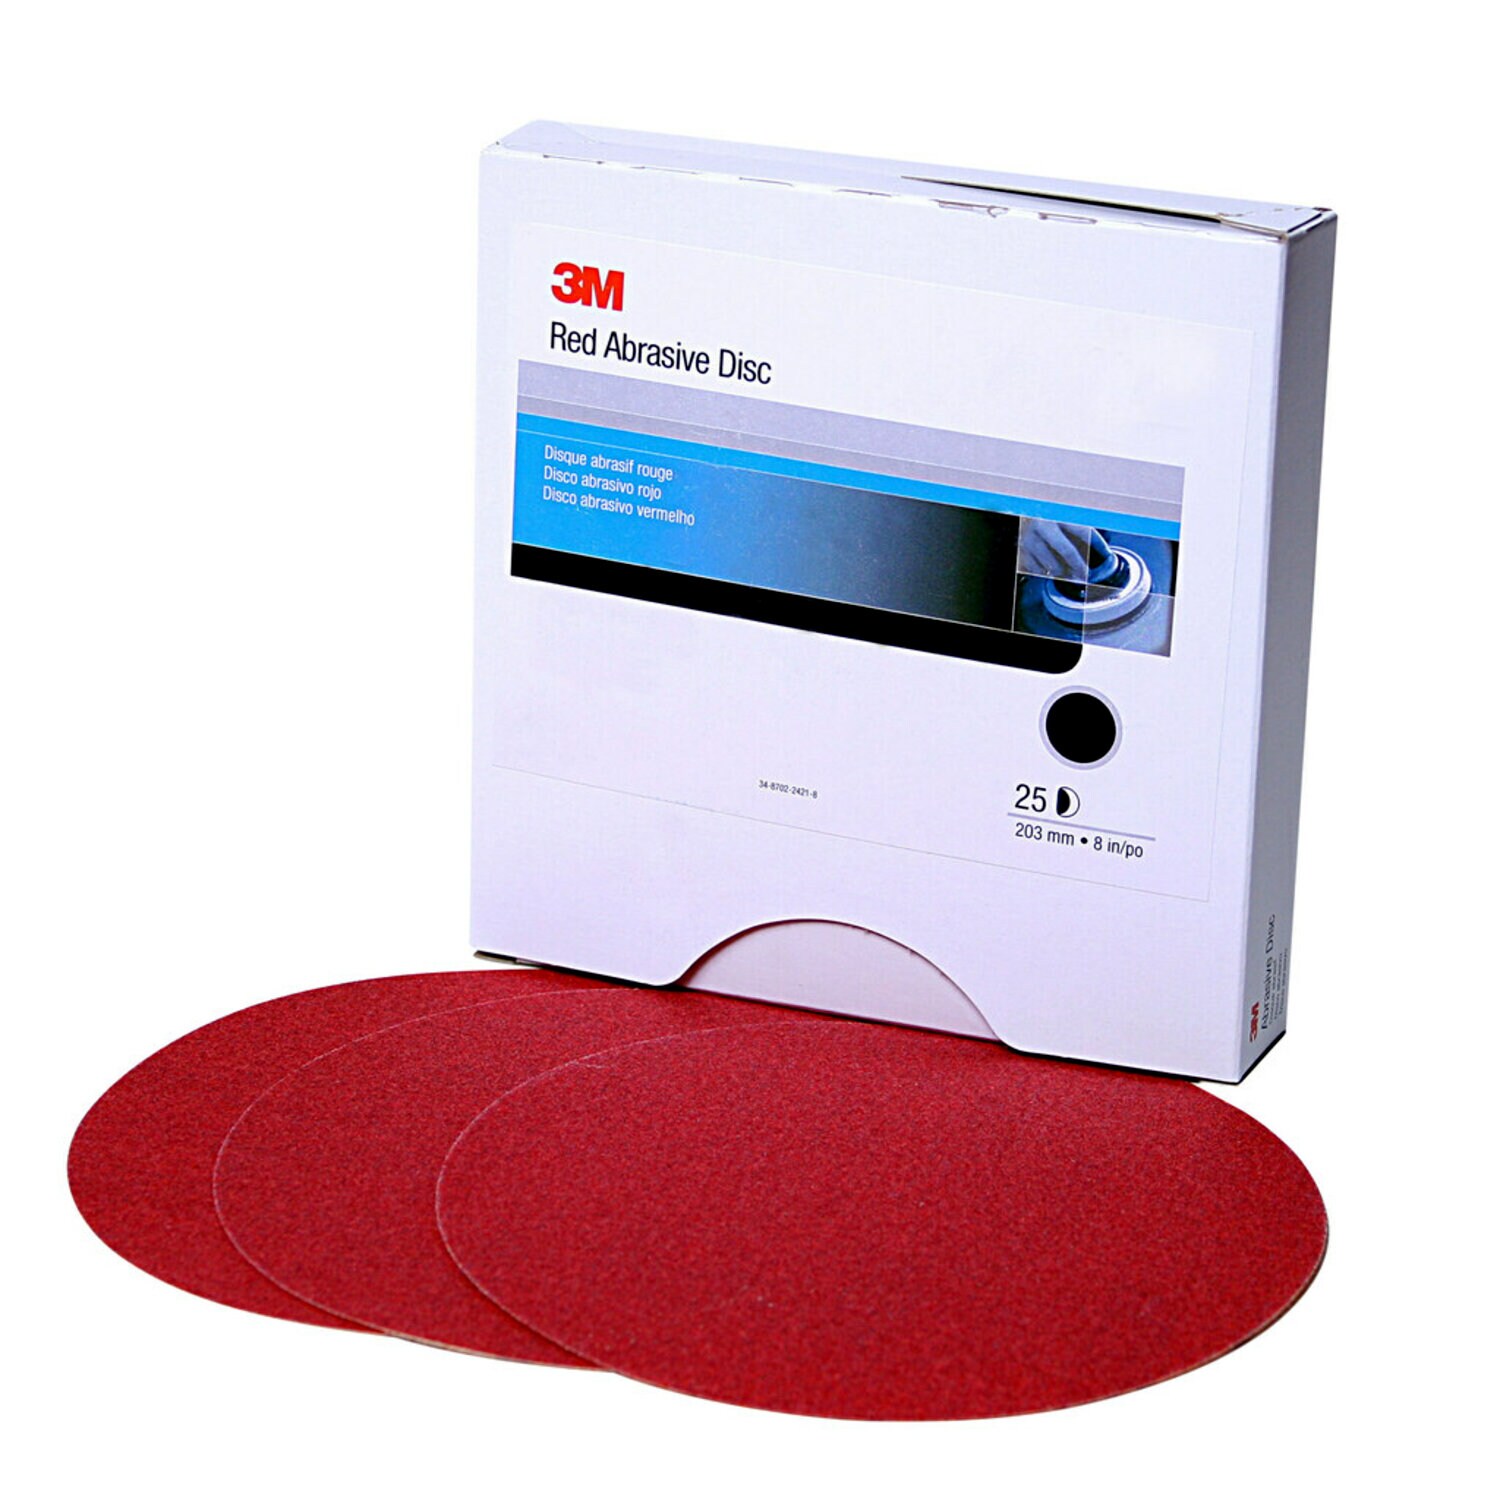 7000119858 - 3M Hookit Red Abrasive Disc, 01294, 5 in P400, 50 discs per carton, 6
cartons per case